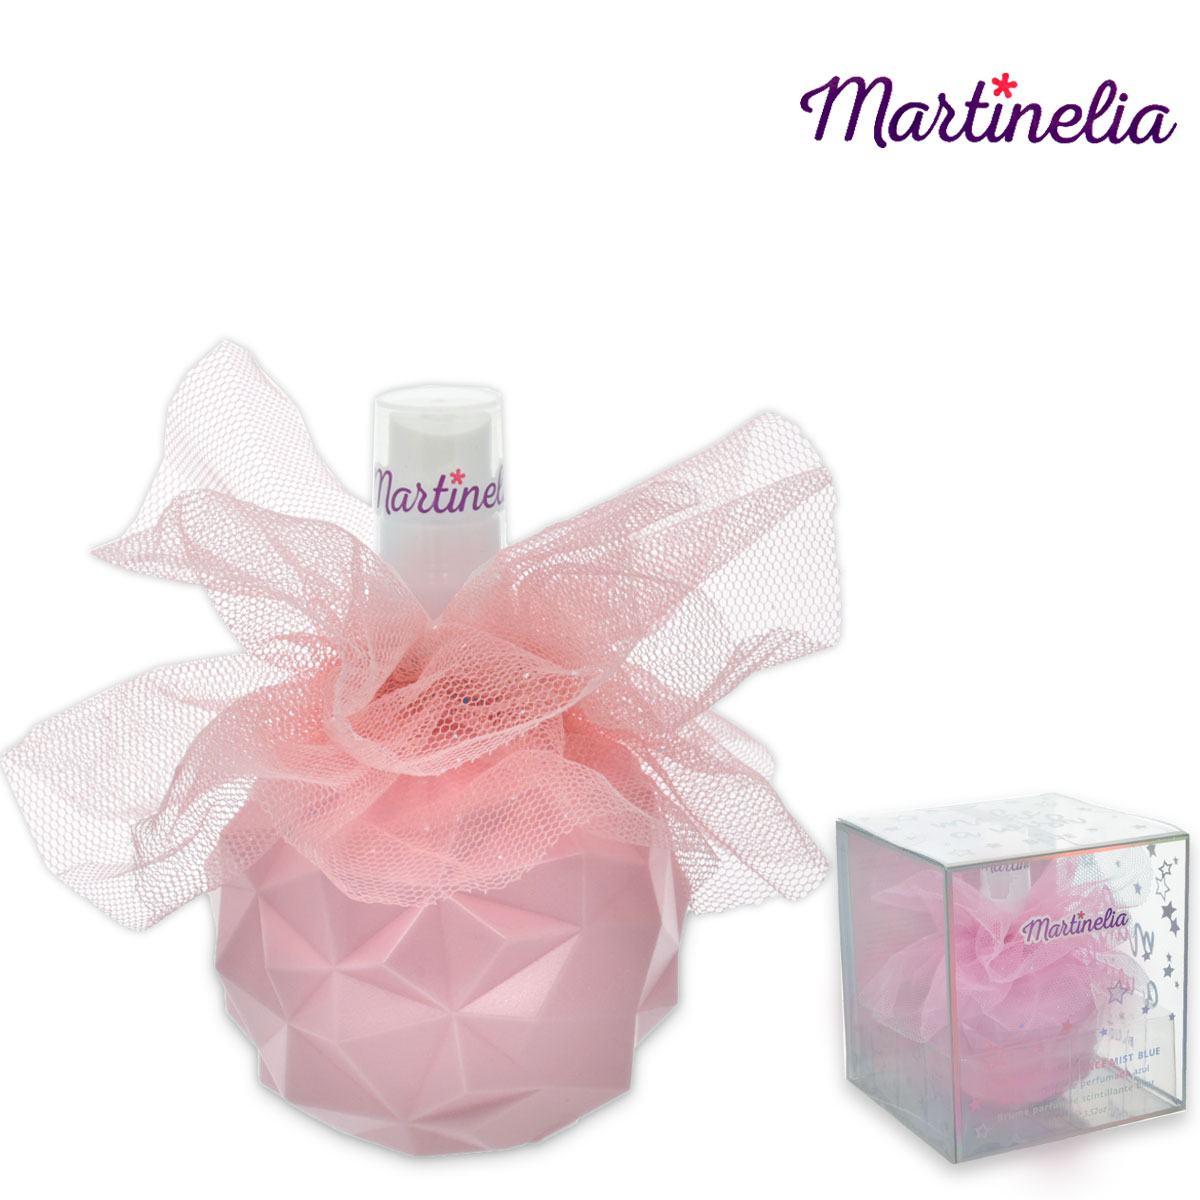 Martinelia starshine purple shimmer fragrance